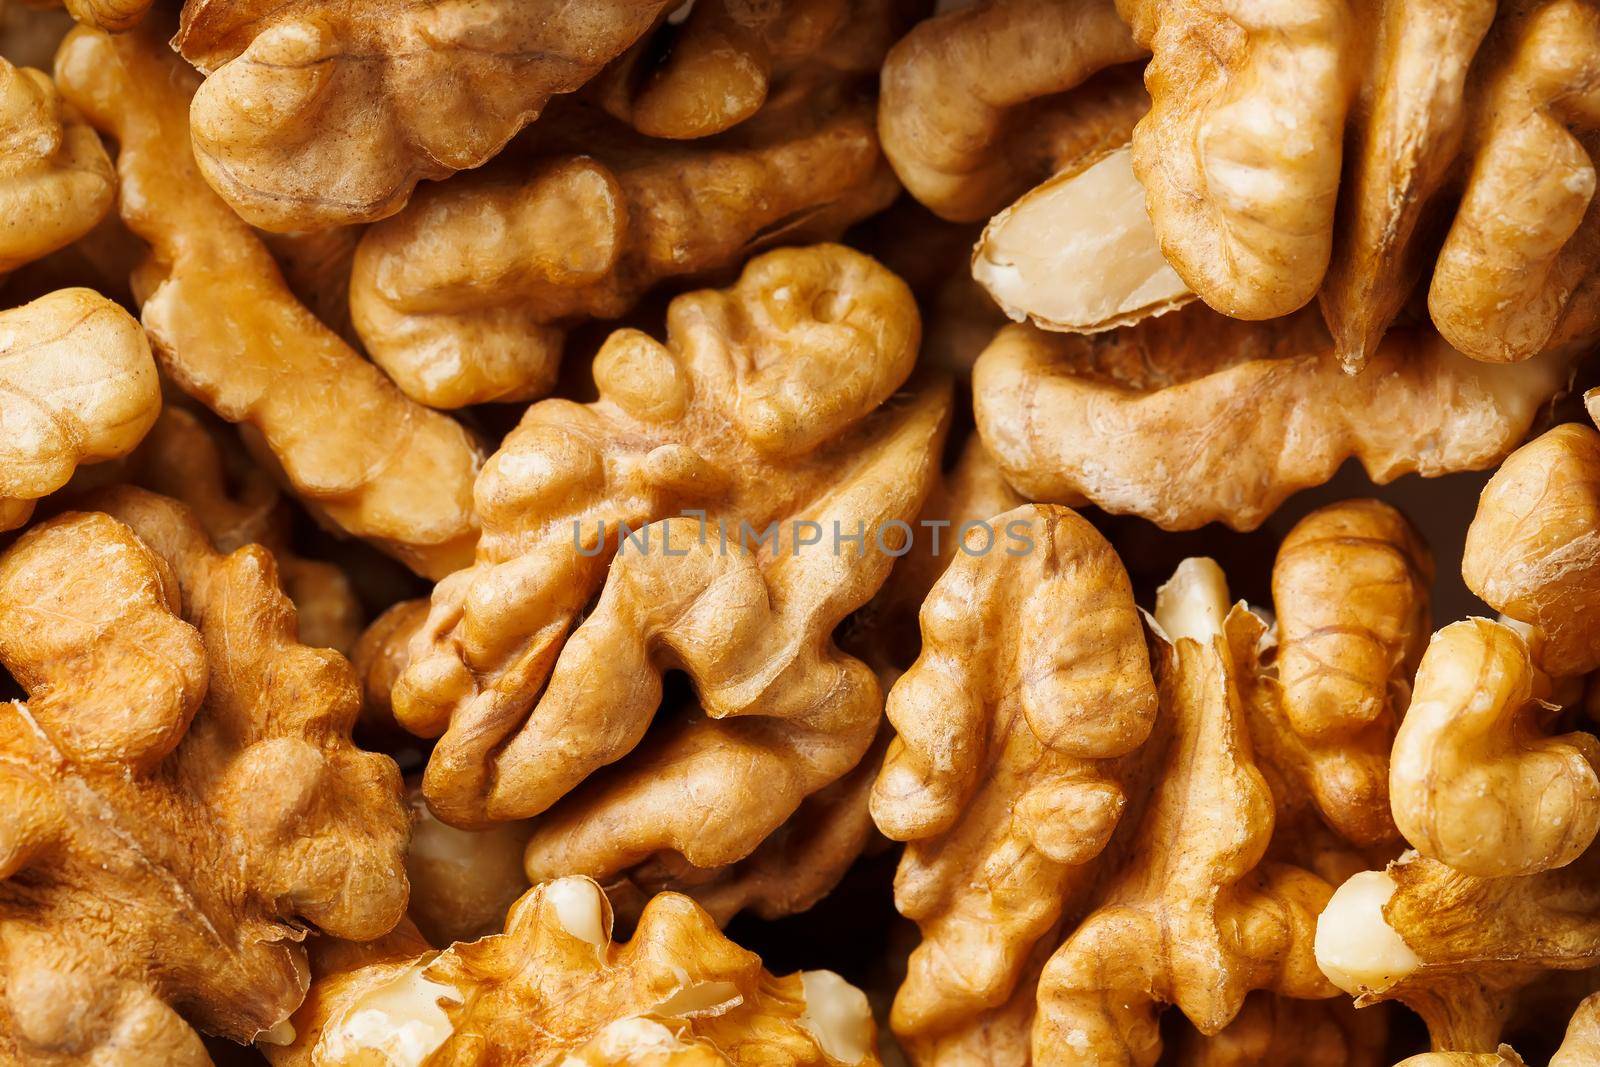 Walnuts sold in spice market.Walnuts Help Lower Cholesterol. Good grains eat healthy. Organic